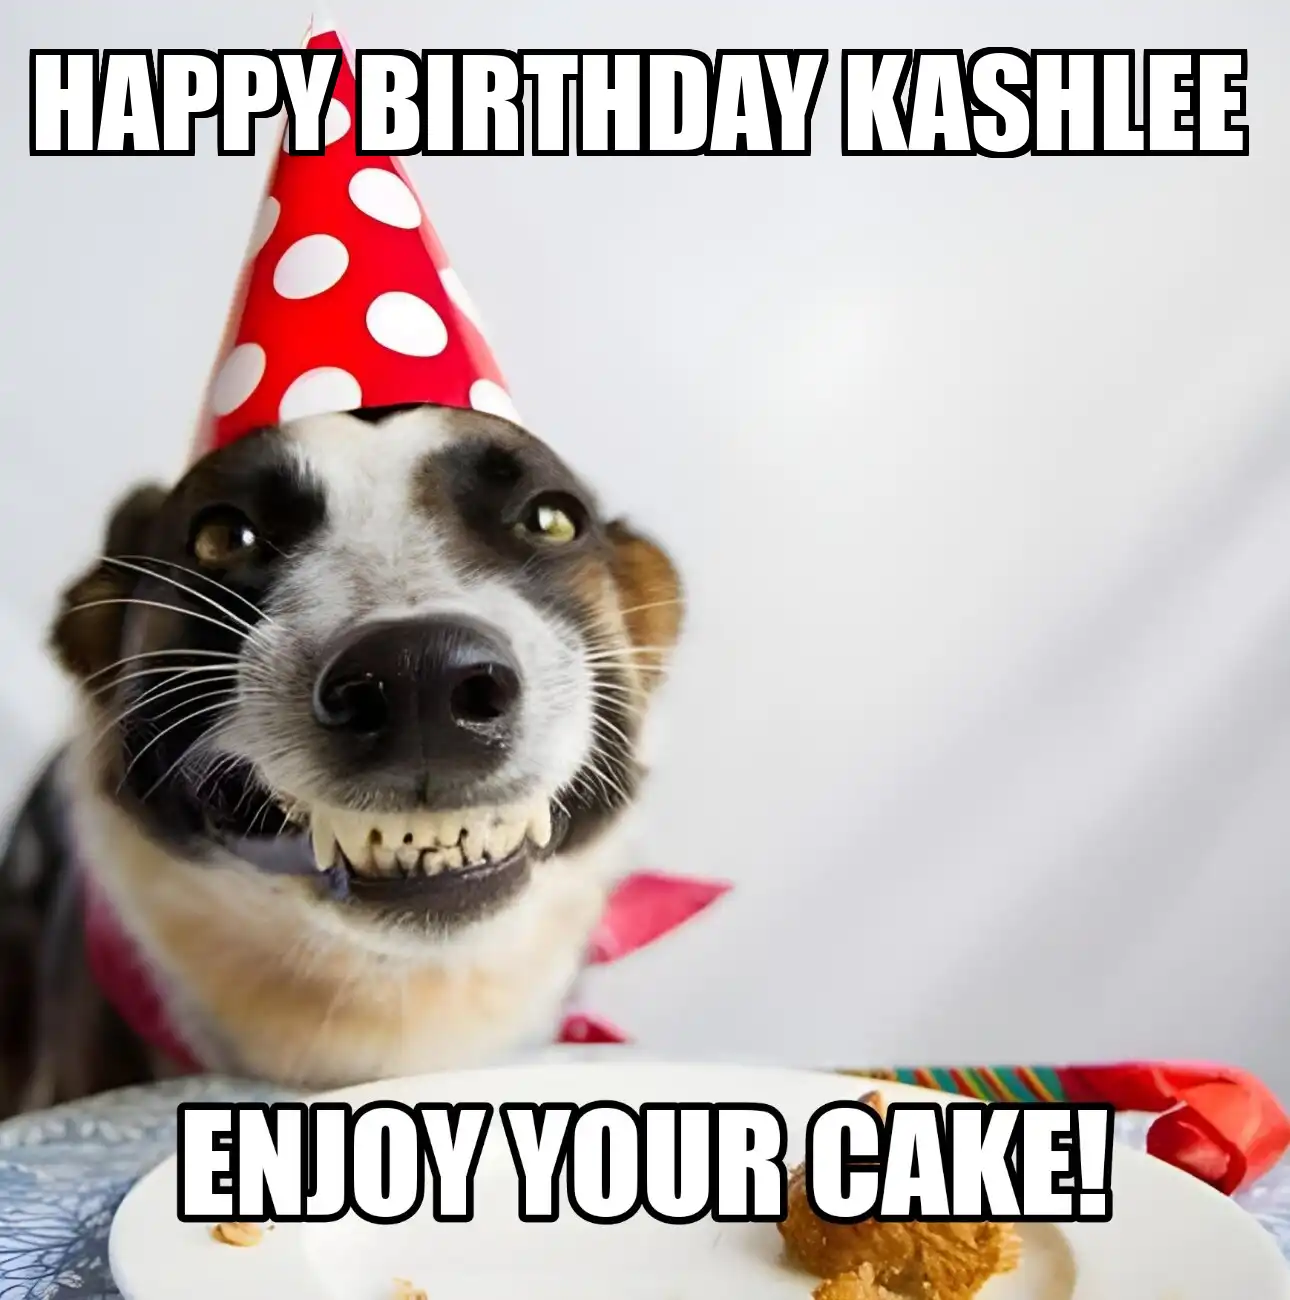 Happy Birthday Kashlee Enjoy Your Cake Dog Meme